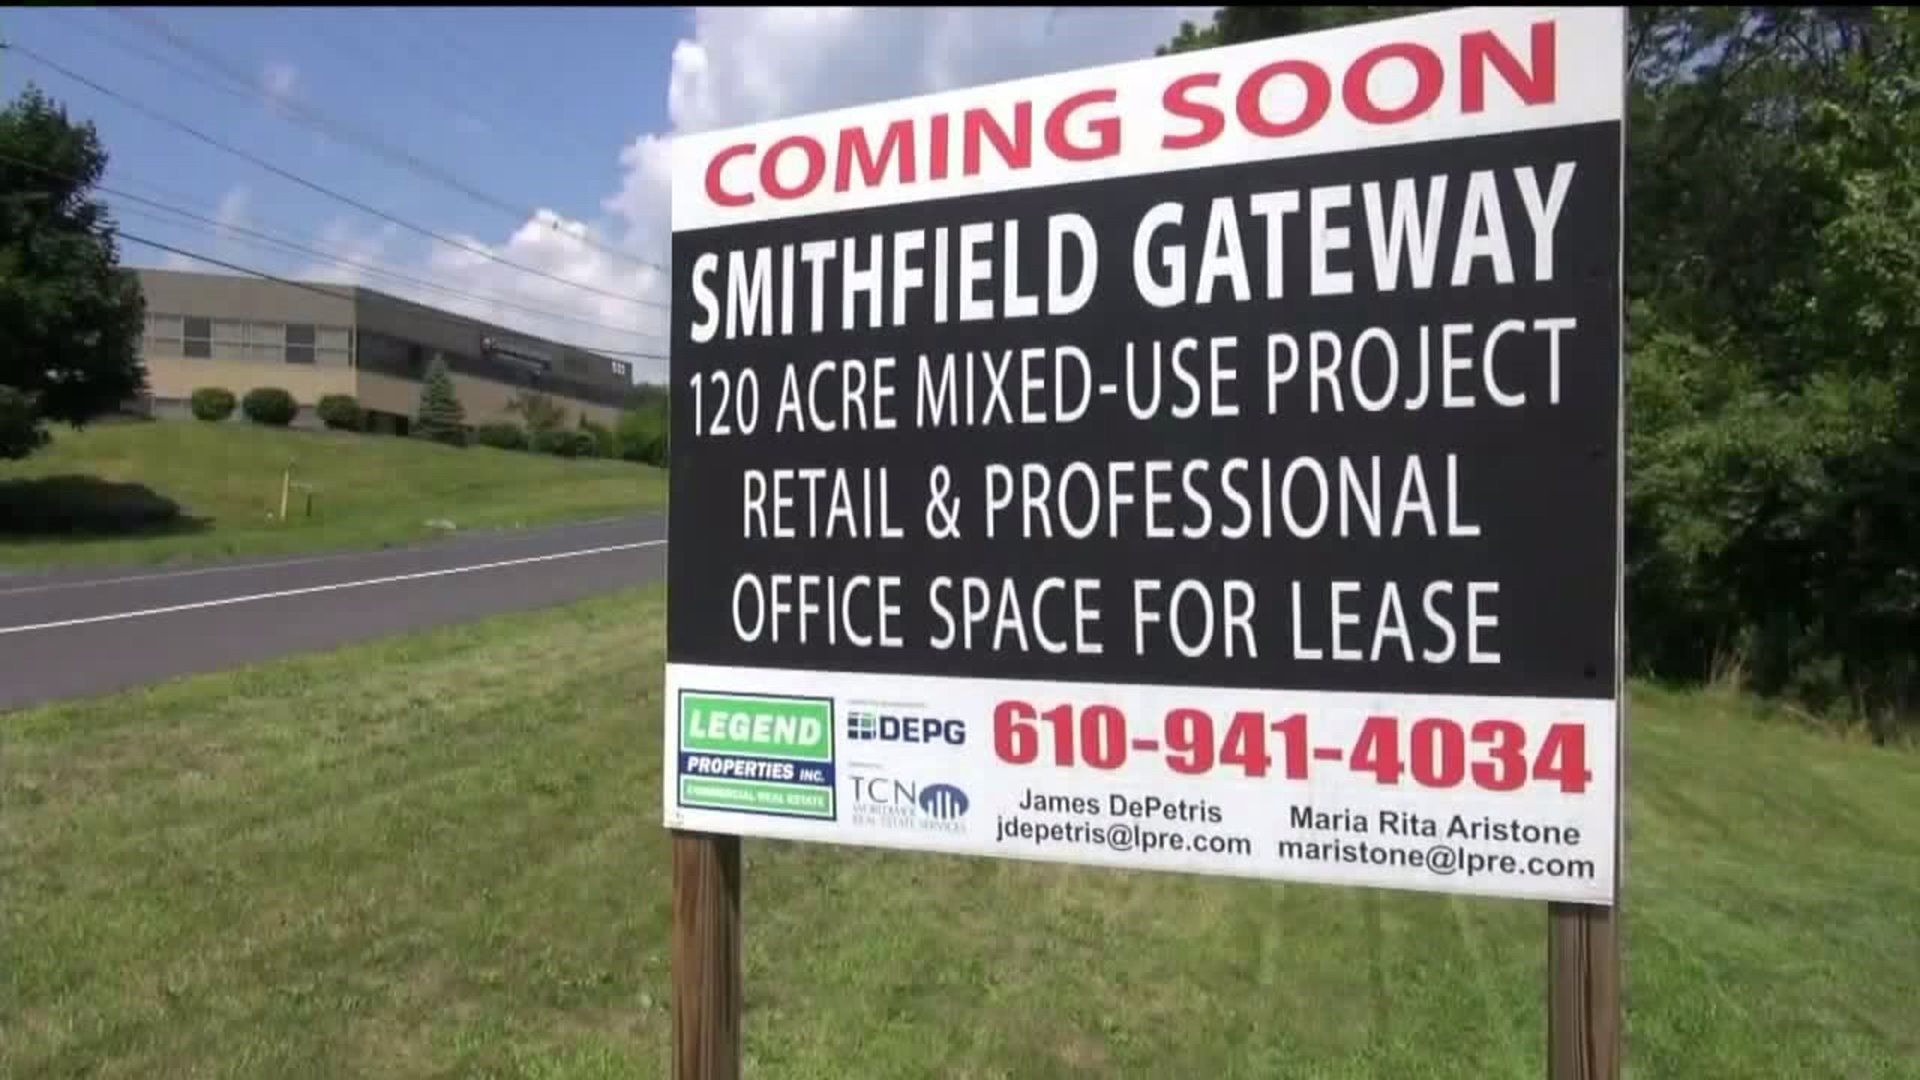 Smithfield Gateway Project Getting Underway